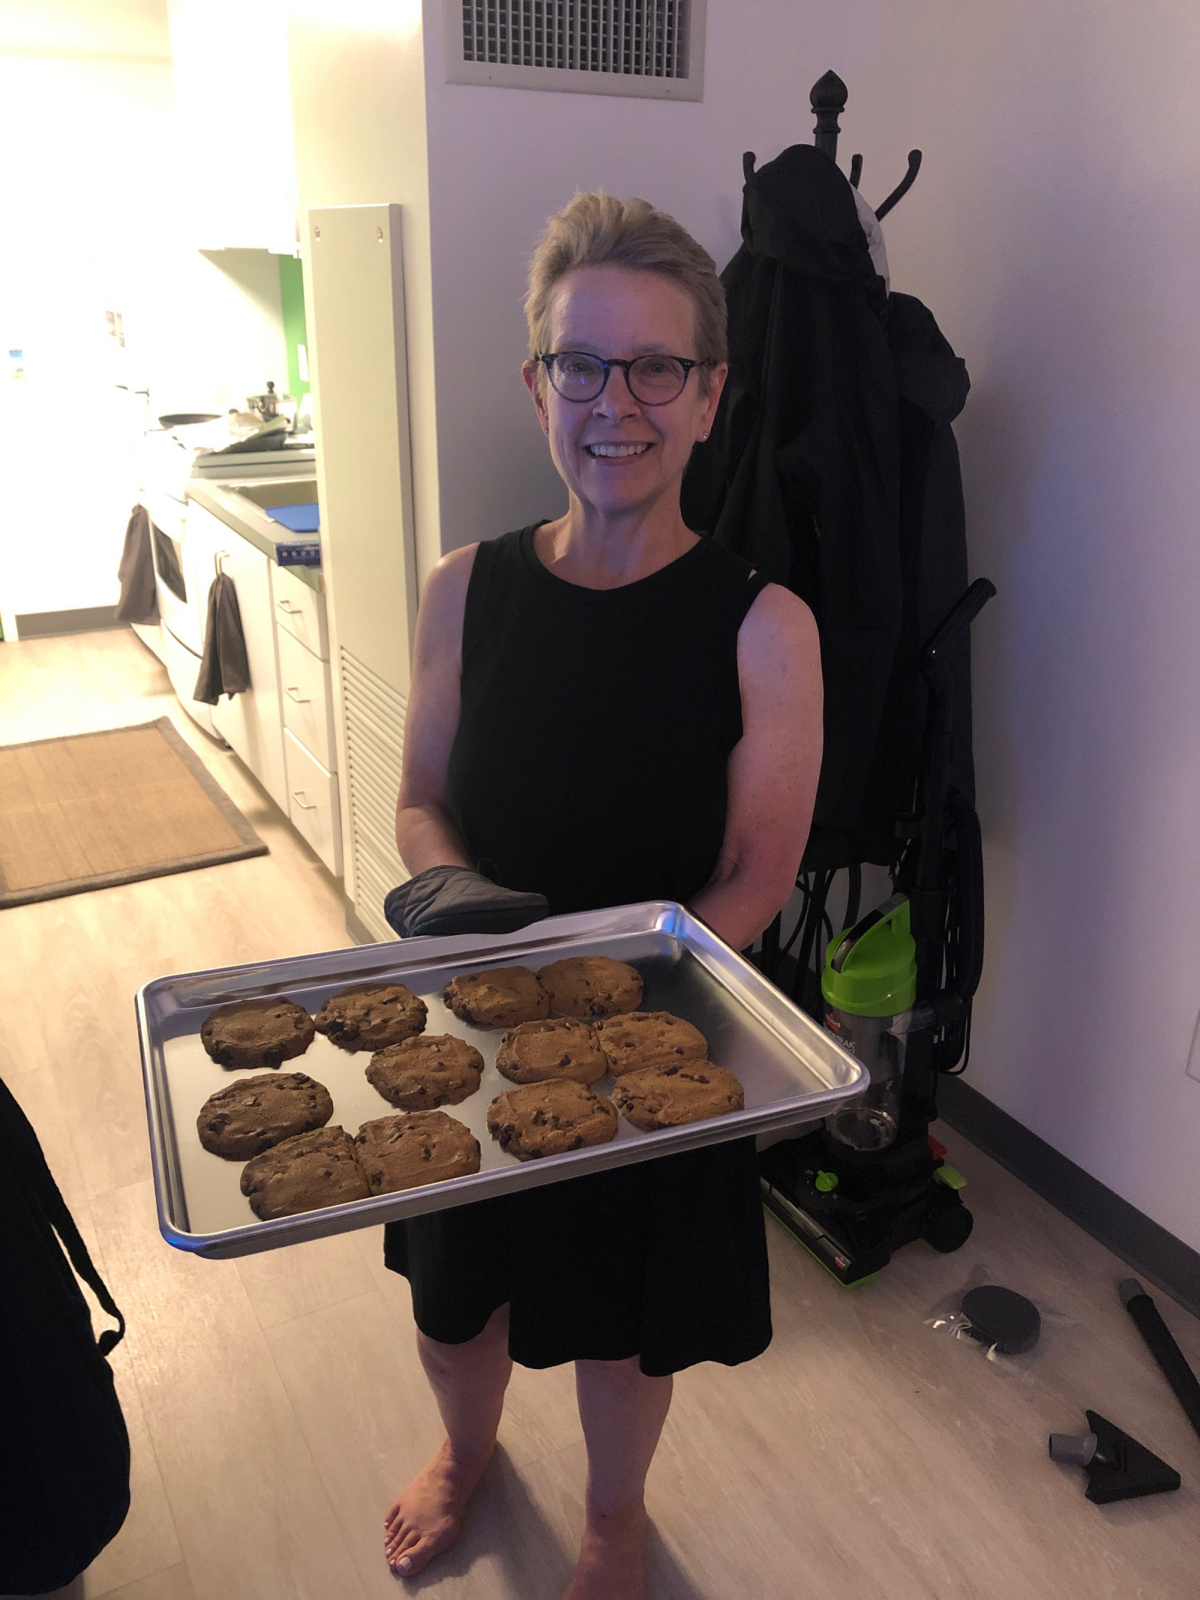 Homemade cookies in Gus’ new dorm room